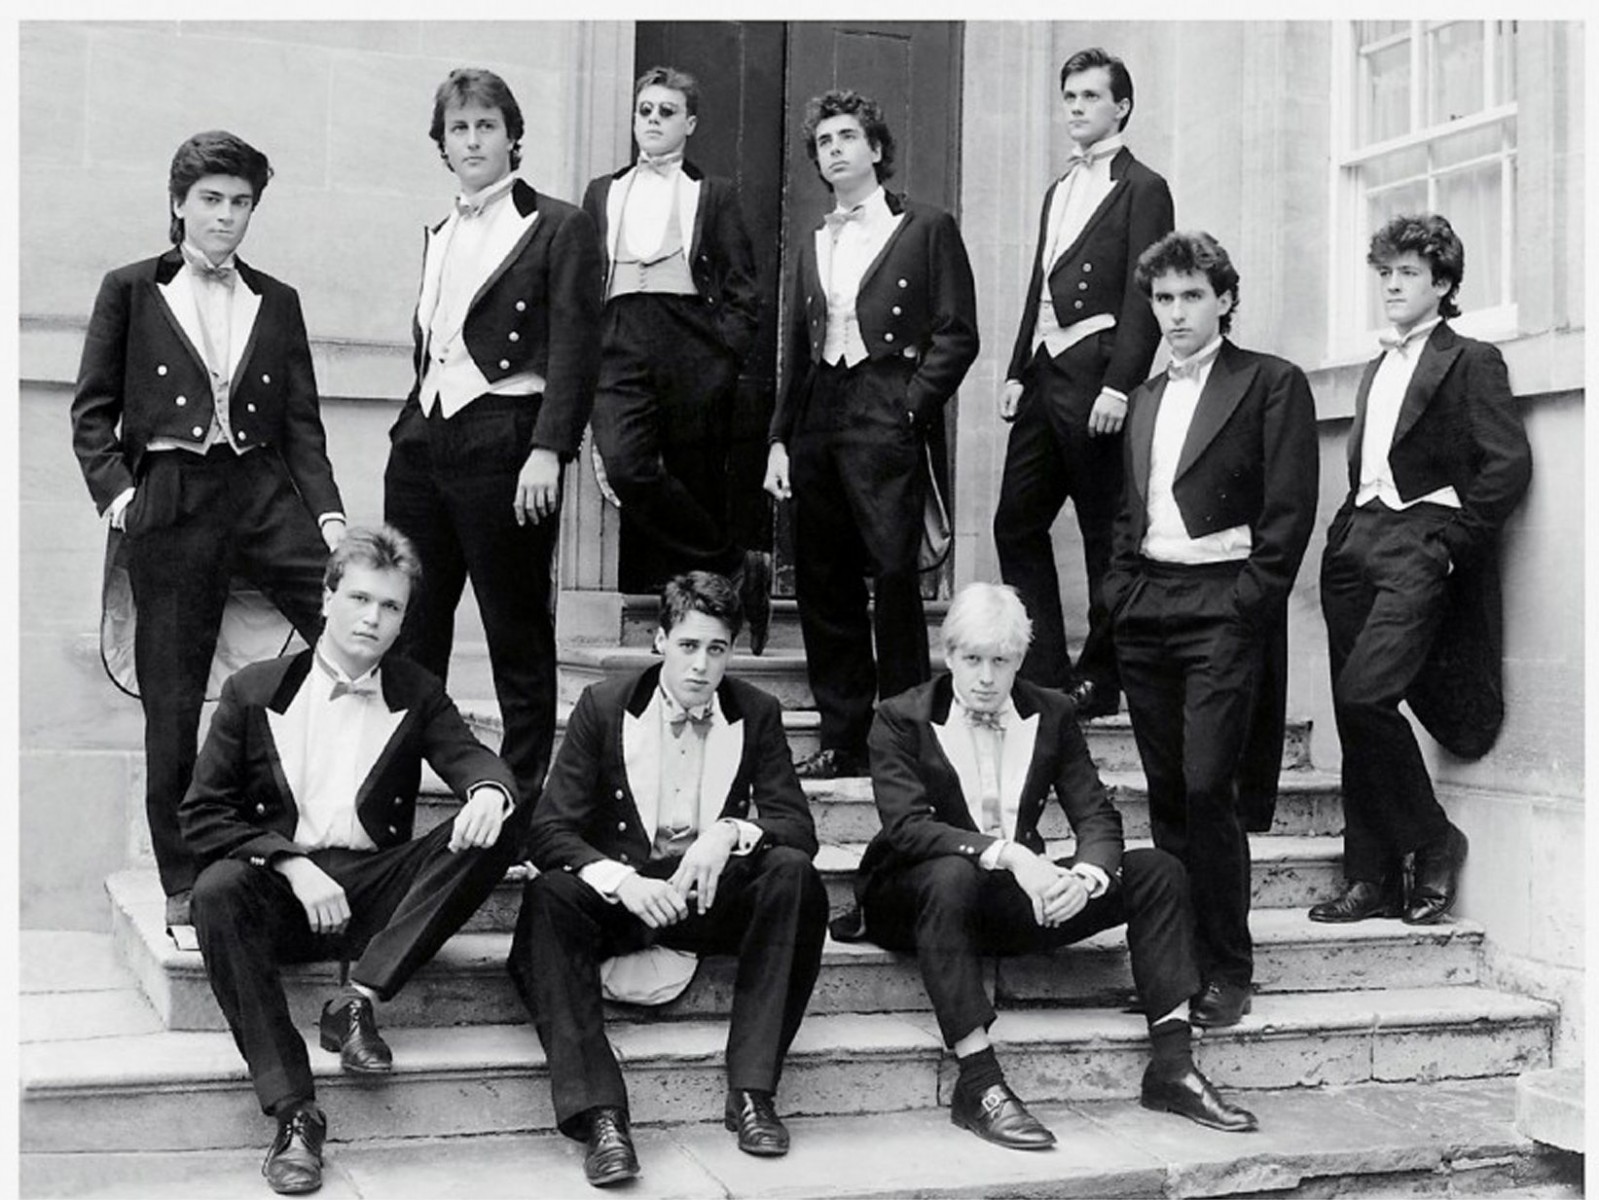 Boris Johnson and David Cameron were part of the Bullingdon Club